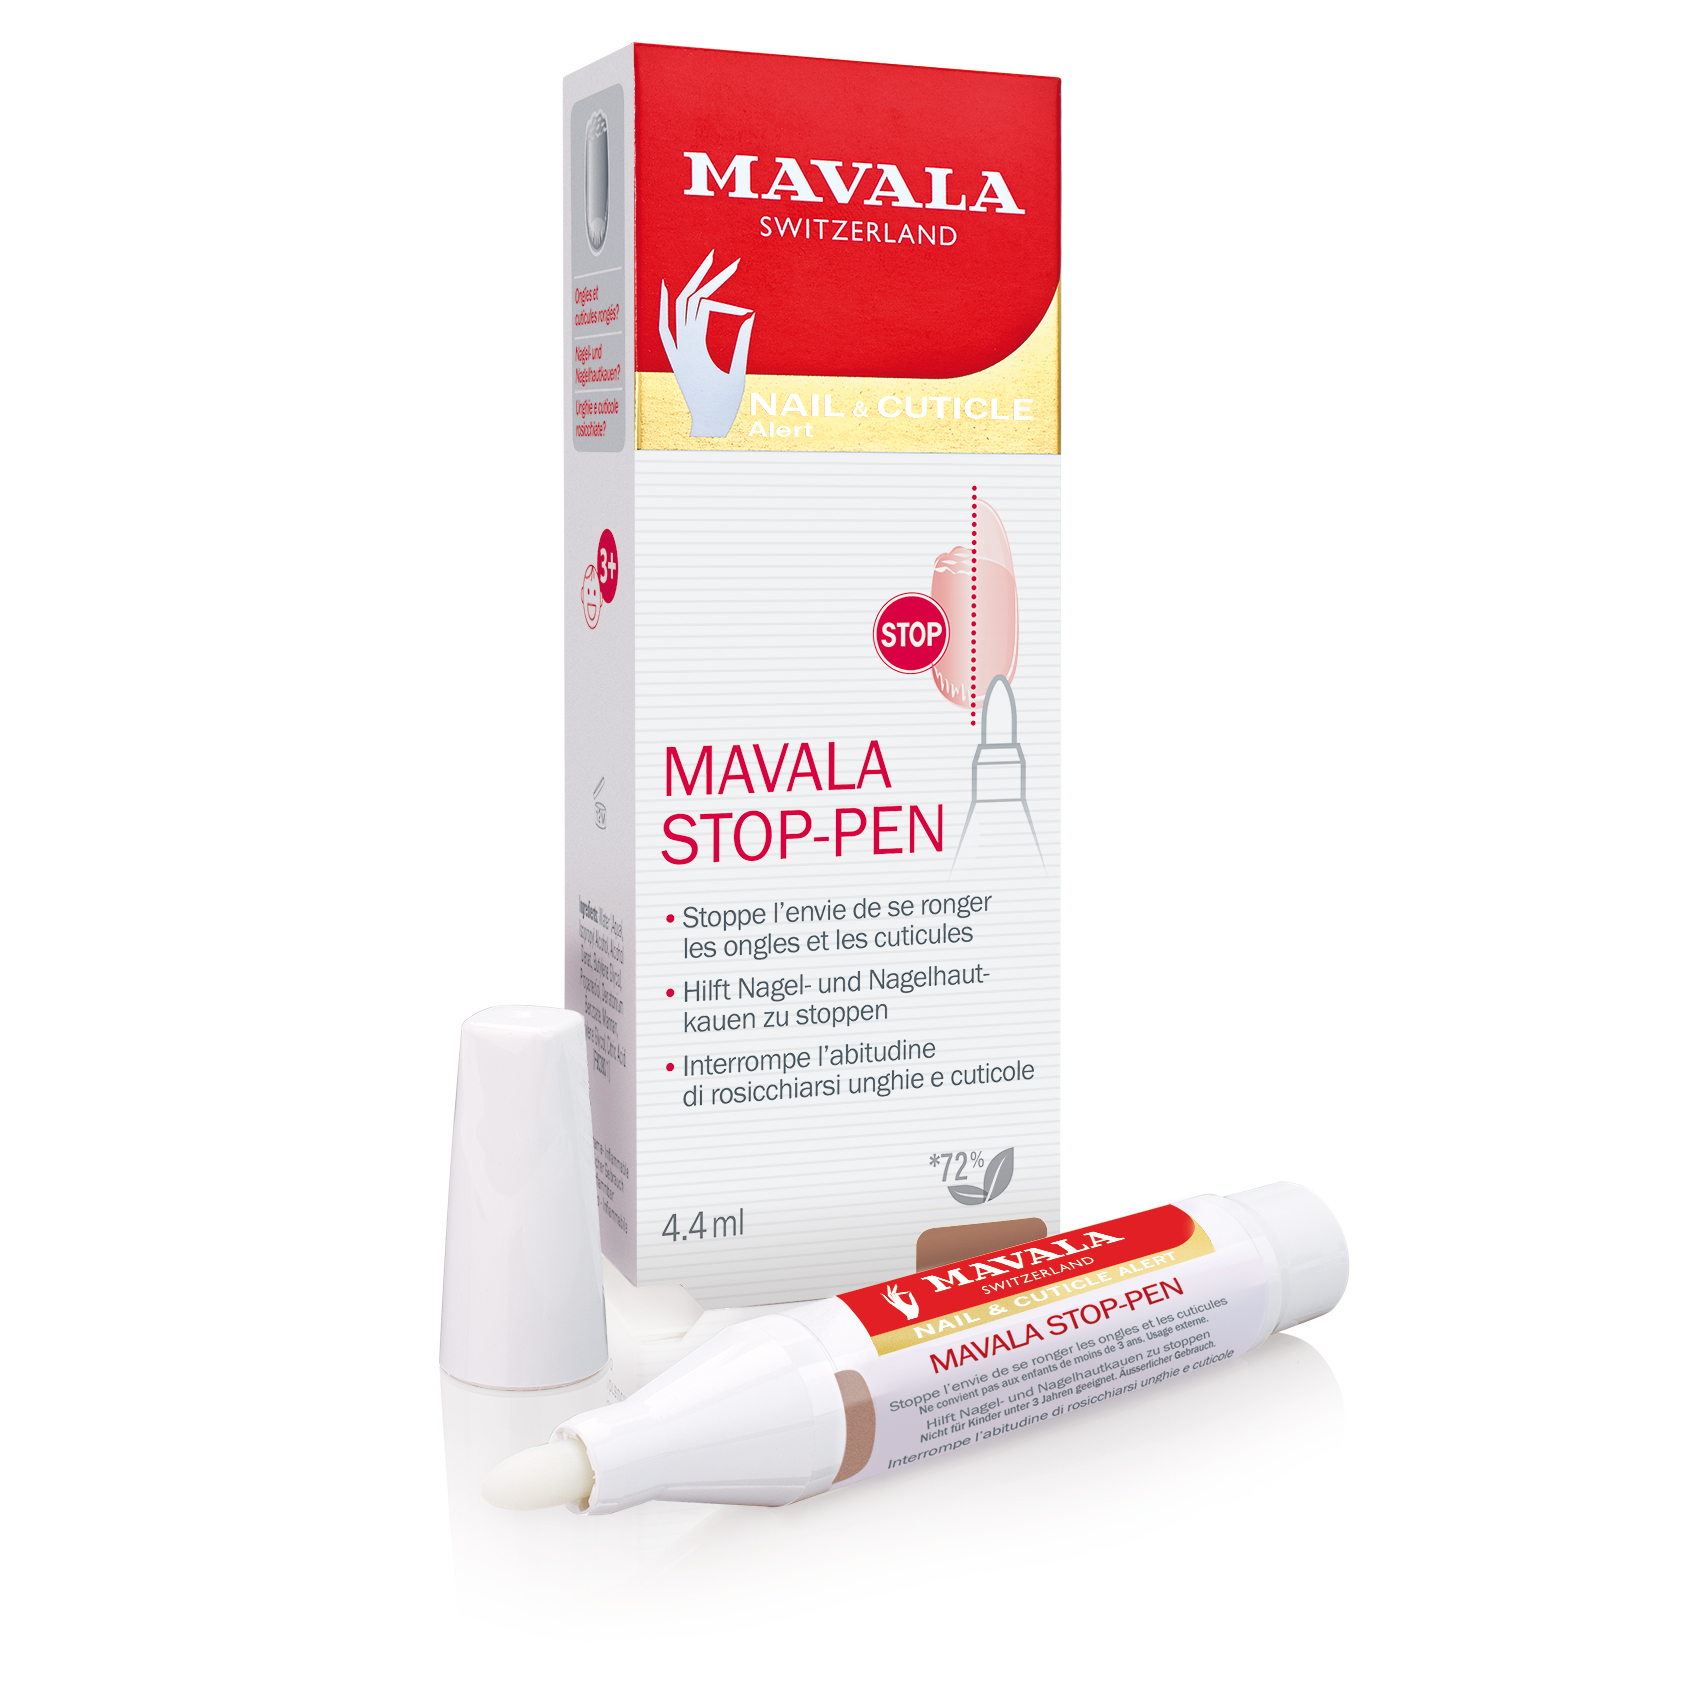 MAVALA STOP-PEN - Hilft, Nägel- und Nagelhautkauen zu stoppen  -  Vegan